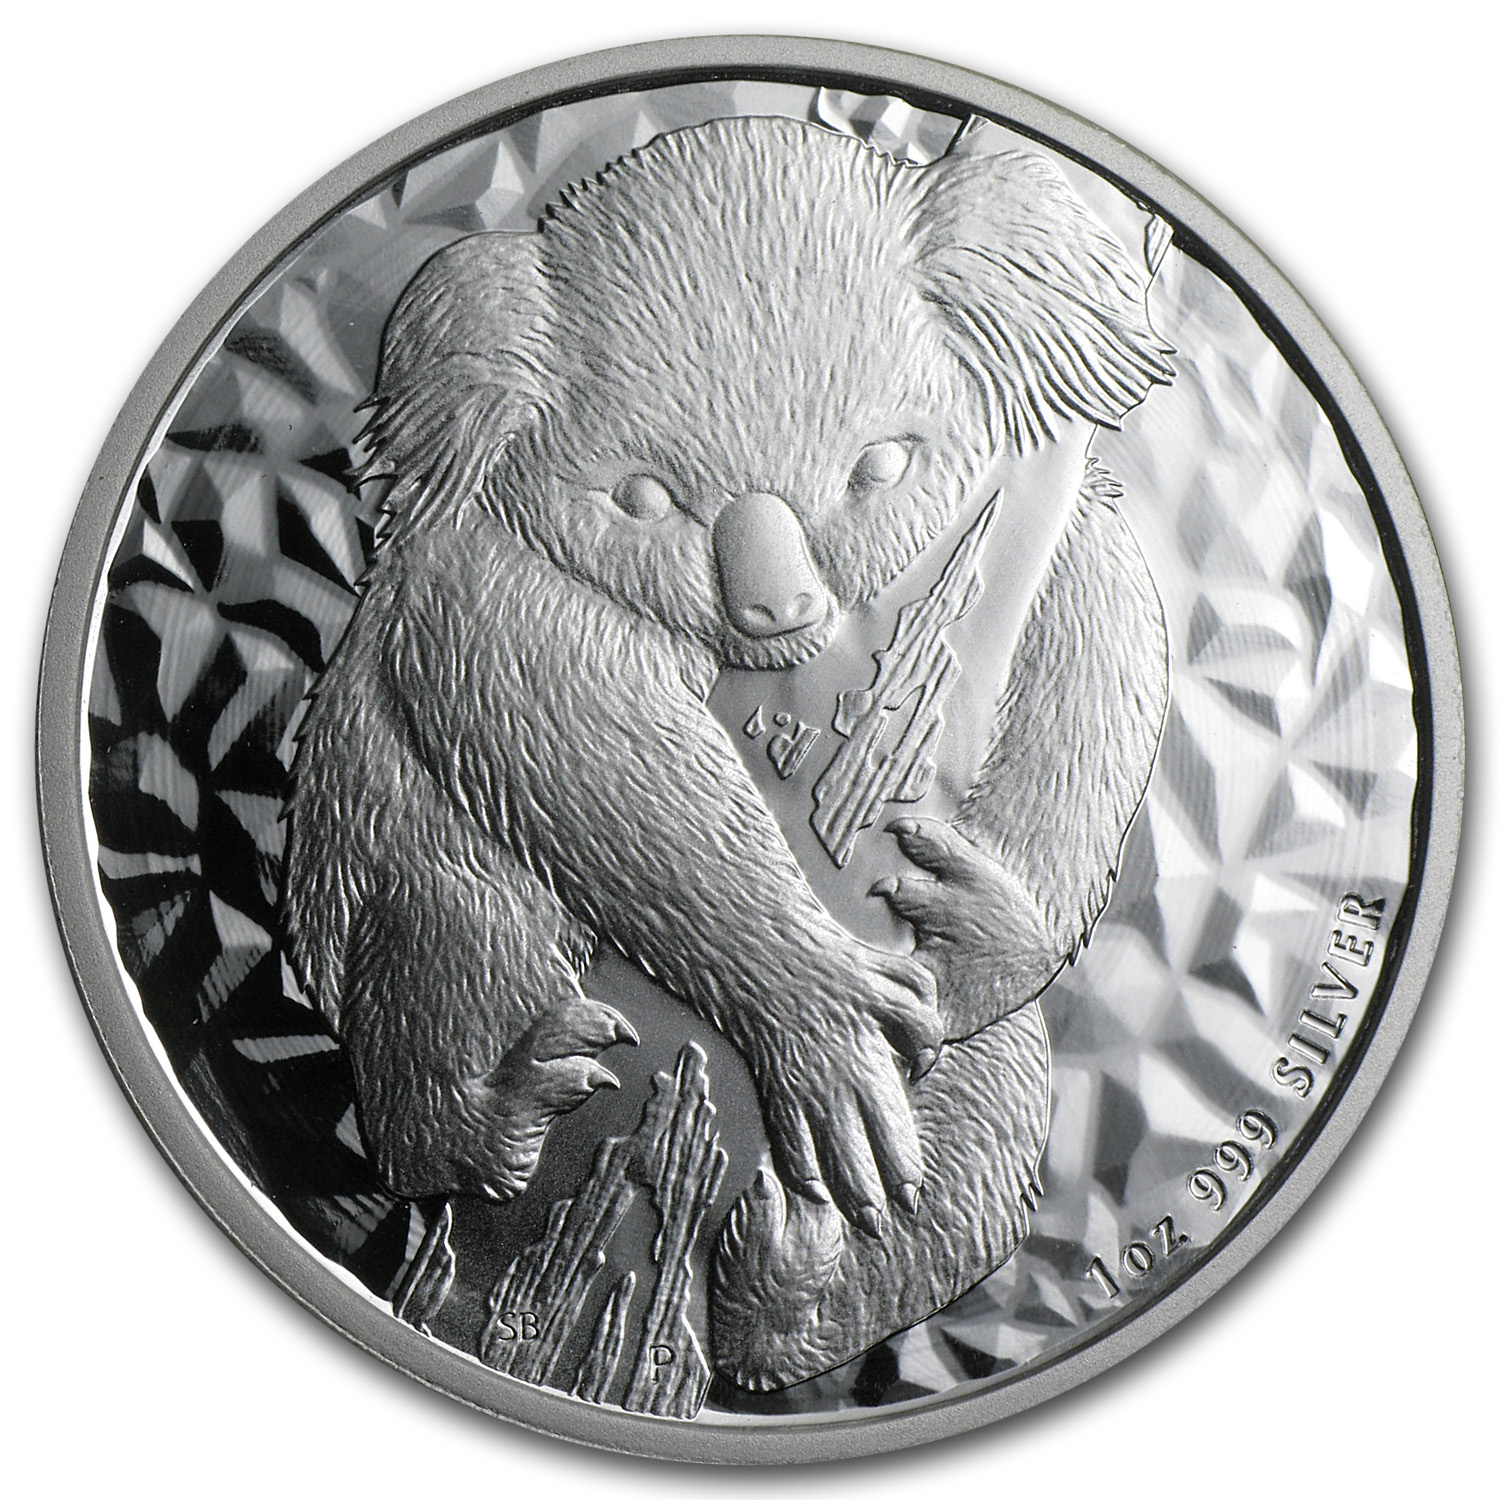 Buy 2007 Australia 1 oz Silver Koala BU - Click Image to Close